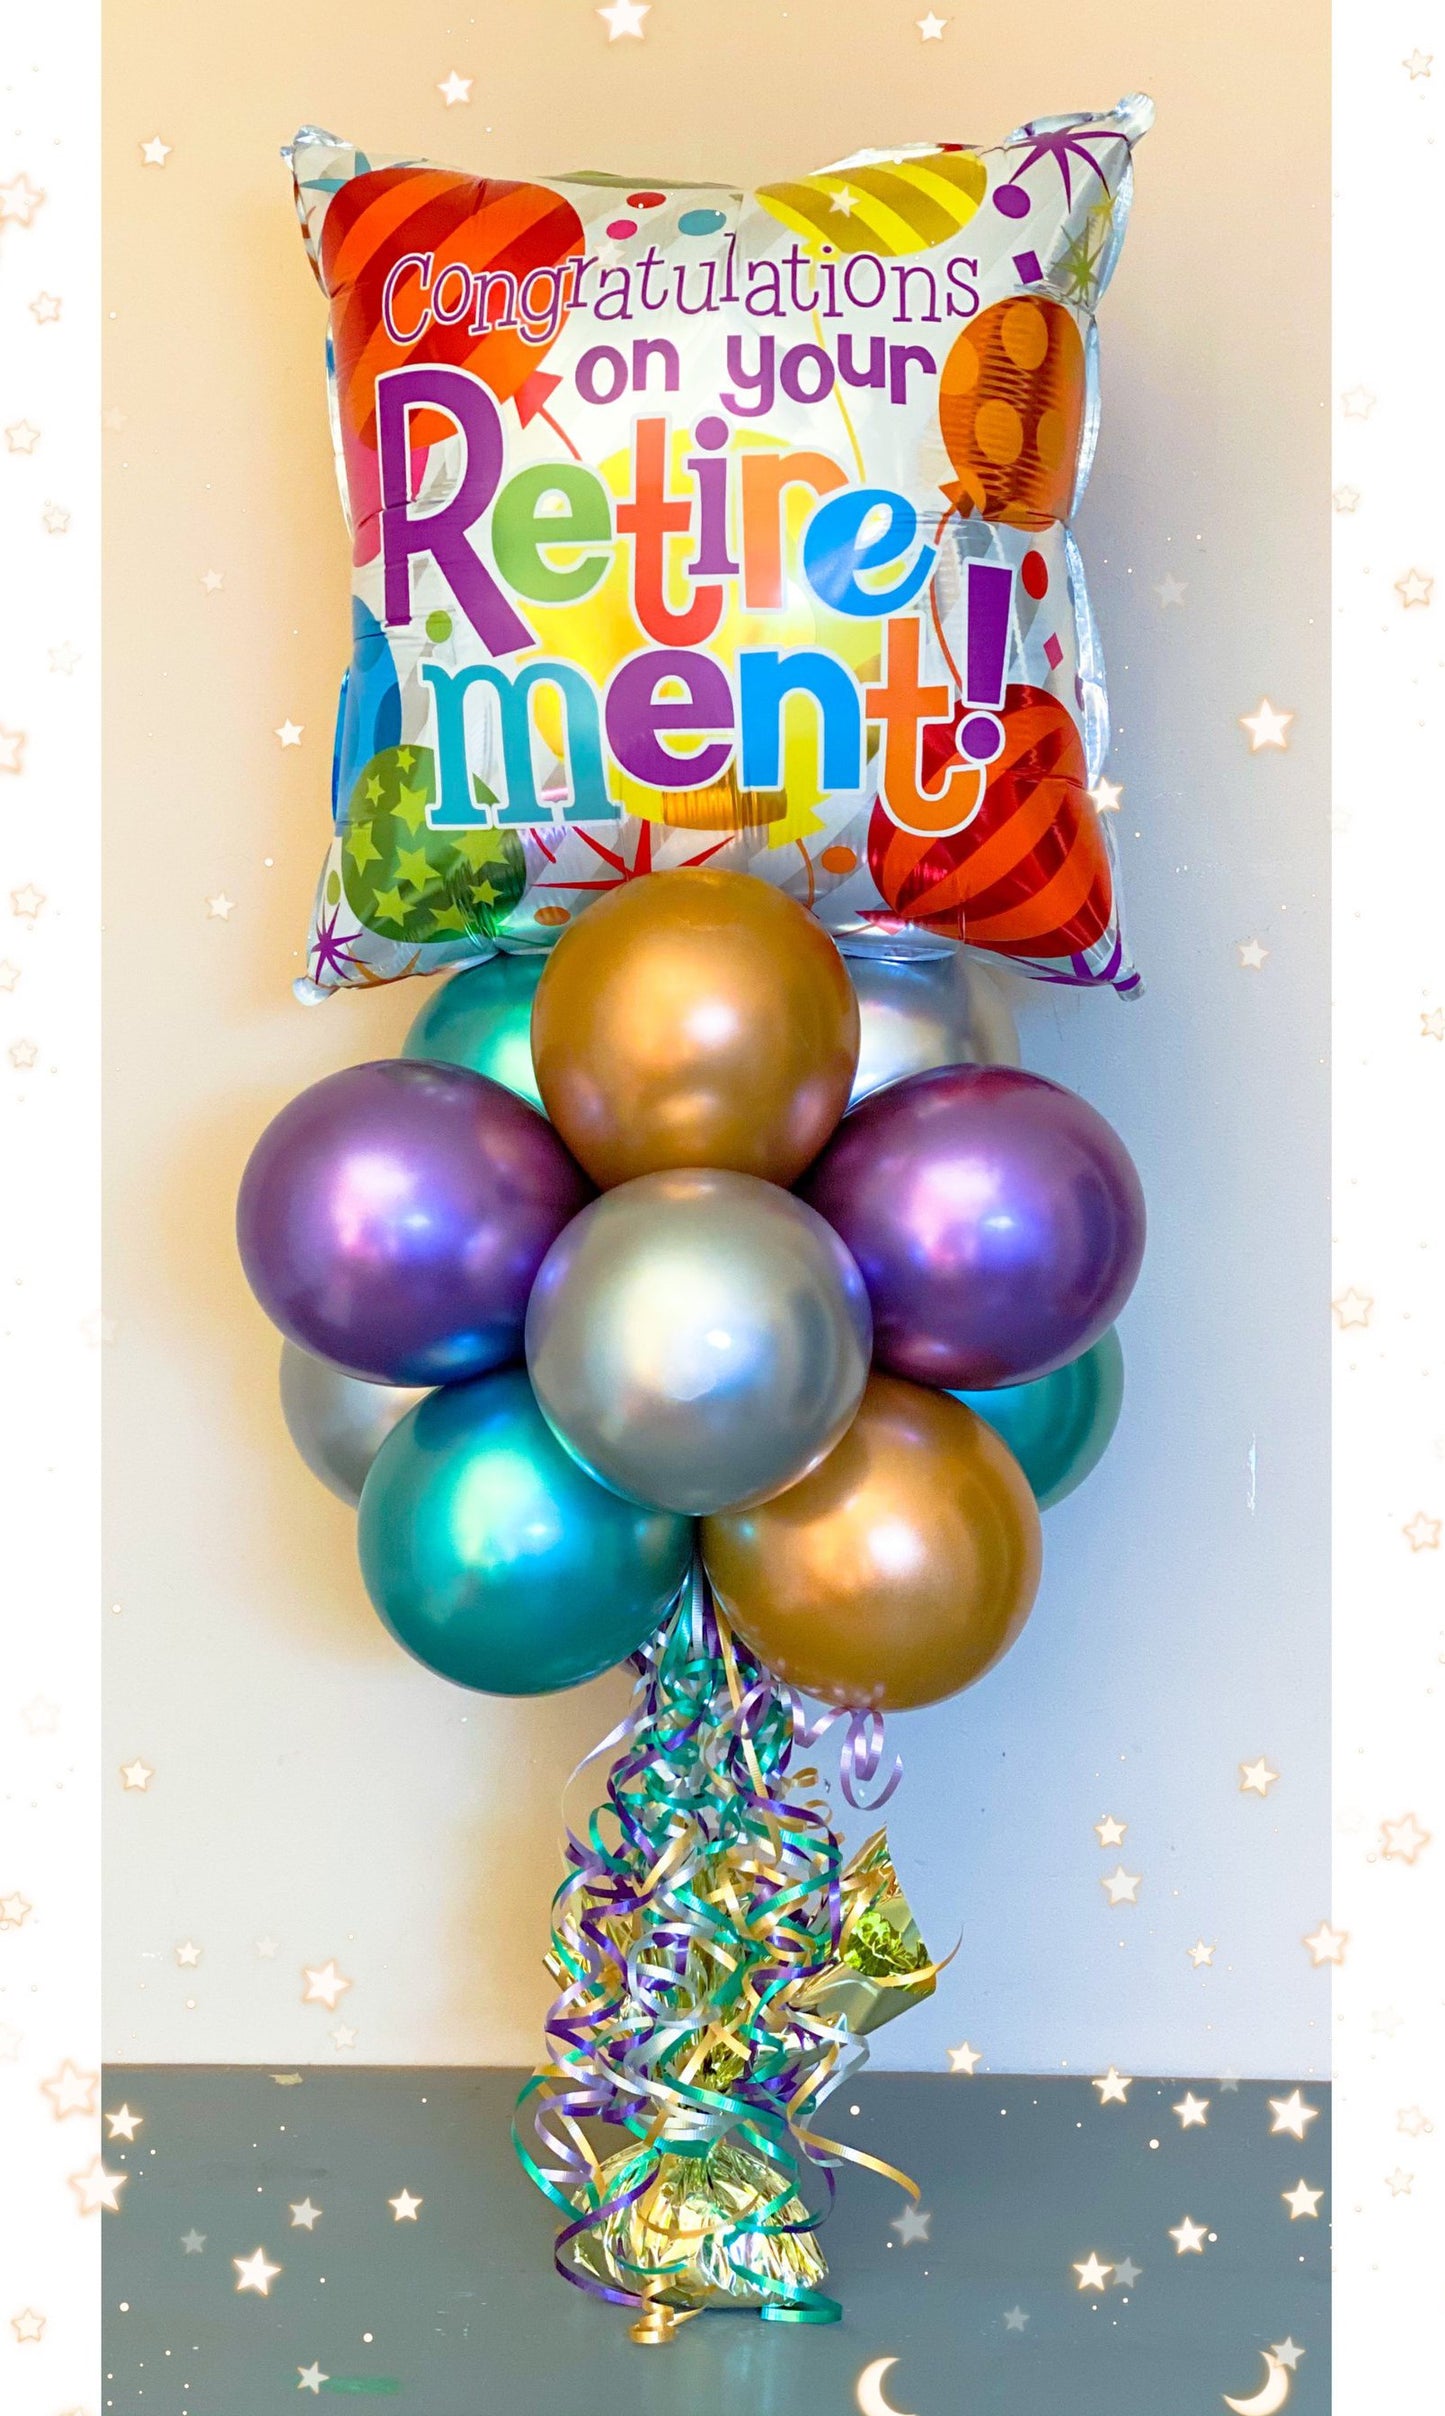 Colourful Happy Retirement Balloon Bouquet